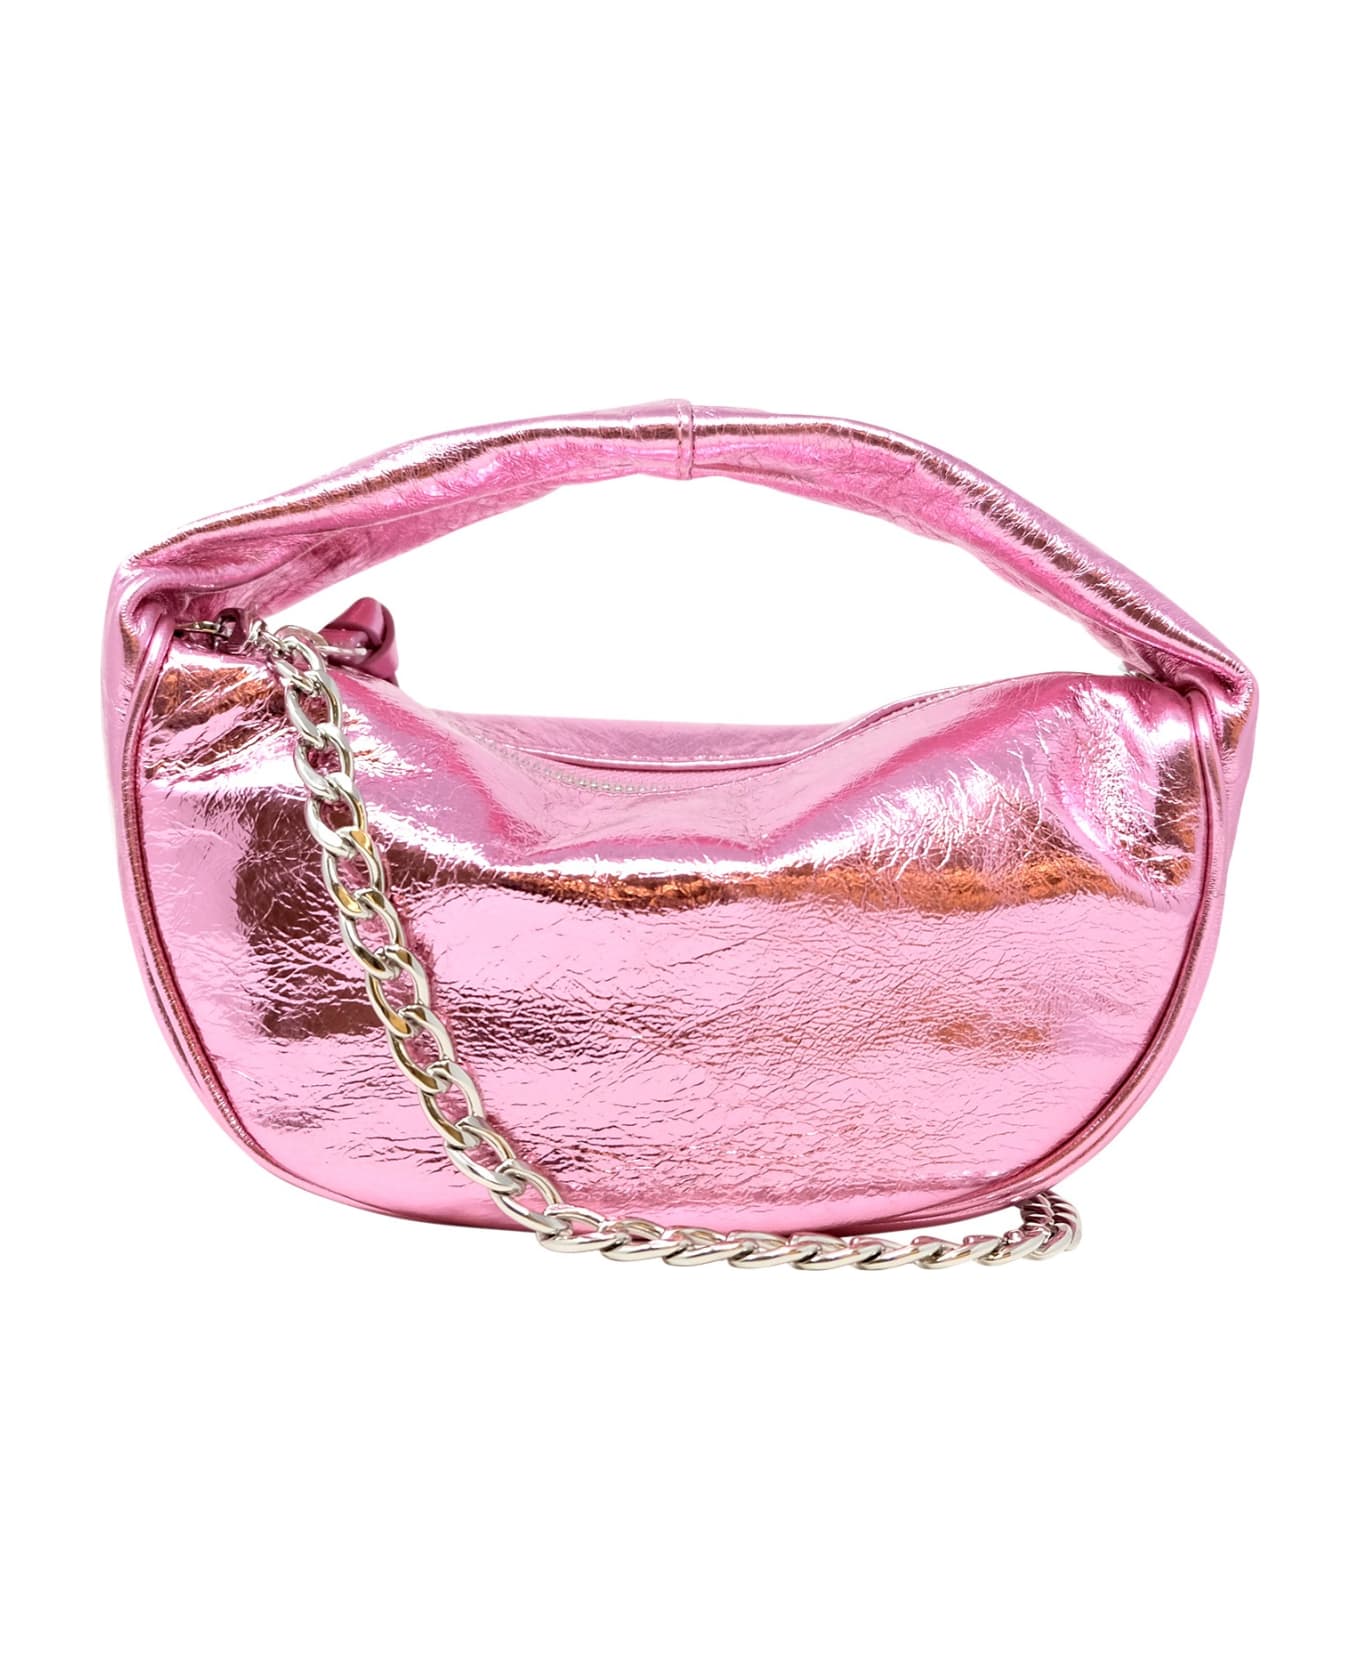 BY FAR Baby Cush Pink Metallic Leather Handbag トートバッグ